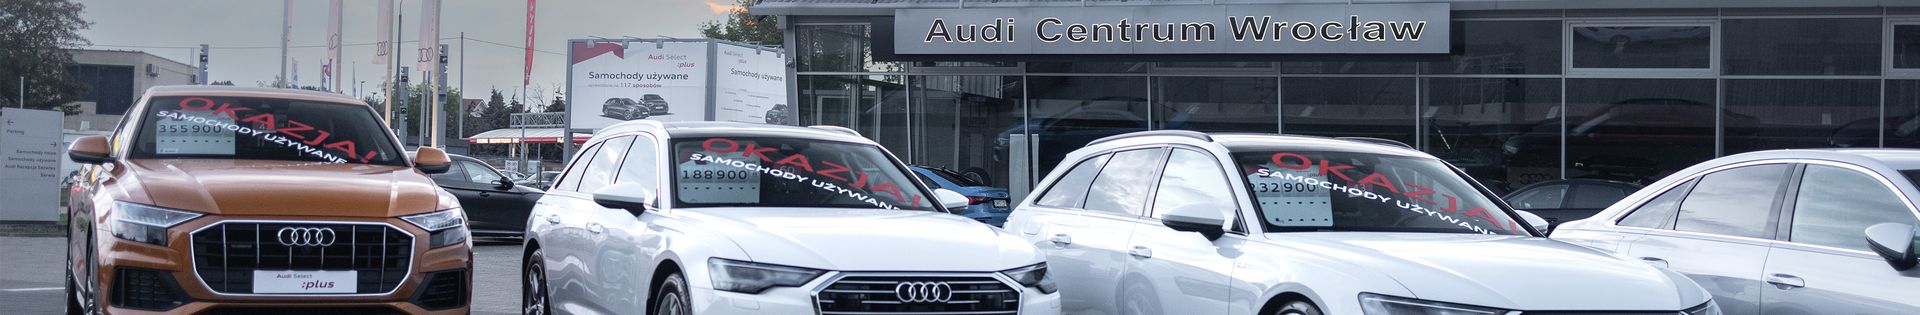 Audi Select plus Audi Centrum Wrocław top banner